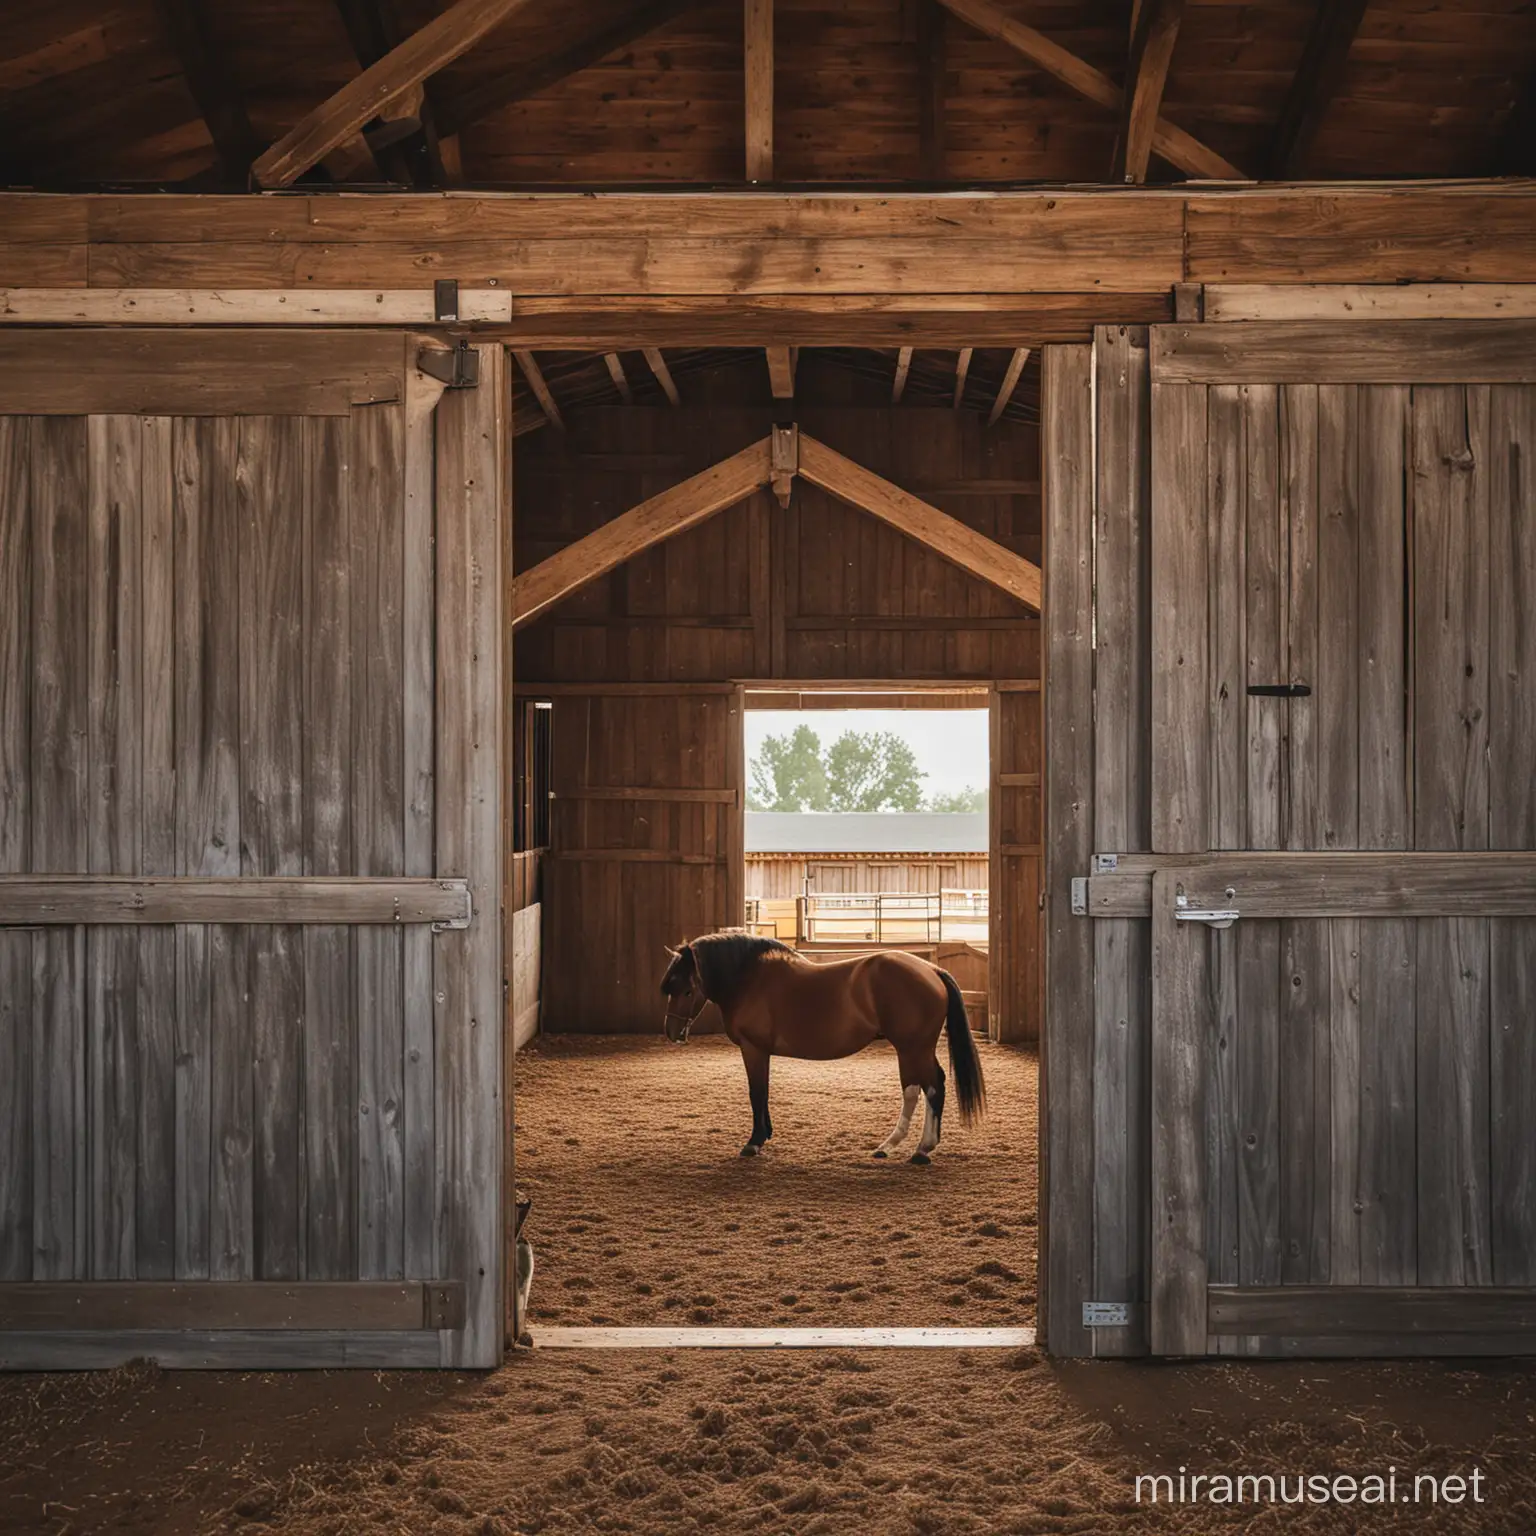 Serene Equestrian Scene in a Rustic Stable